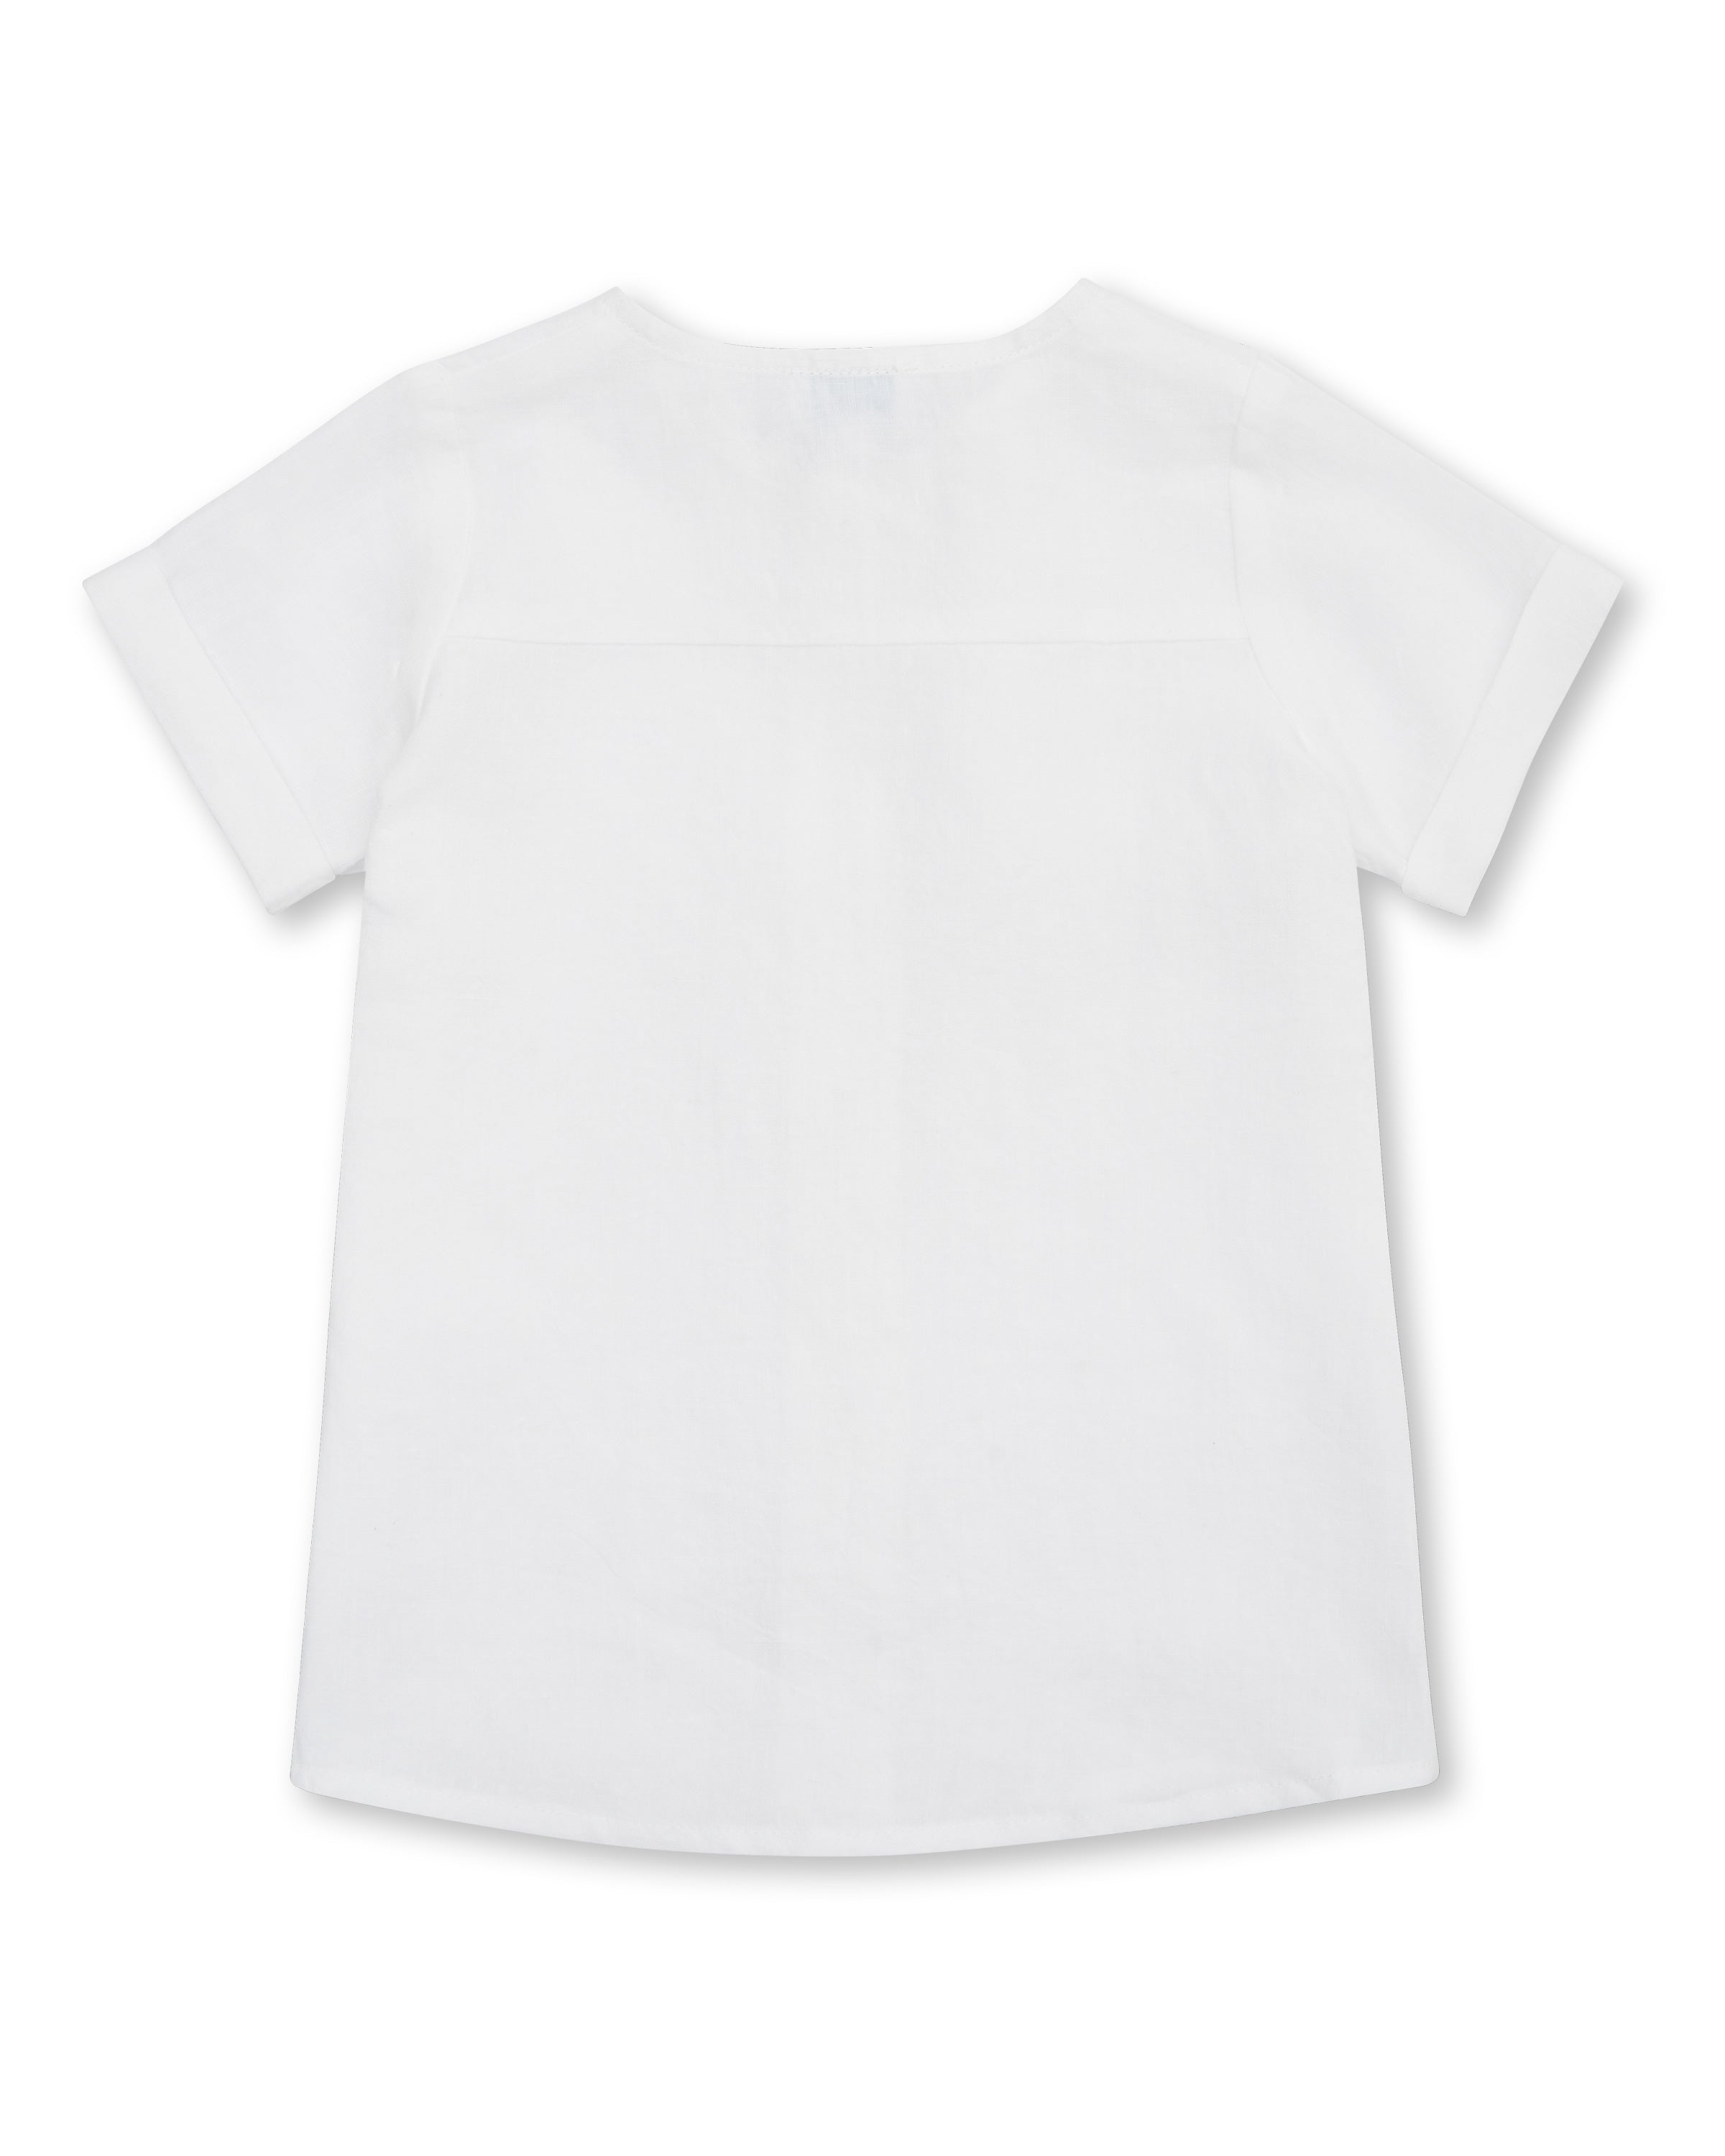 Boys' Designer Shirts, White, ages 1 to 6.